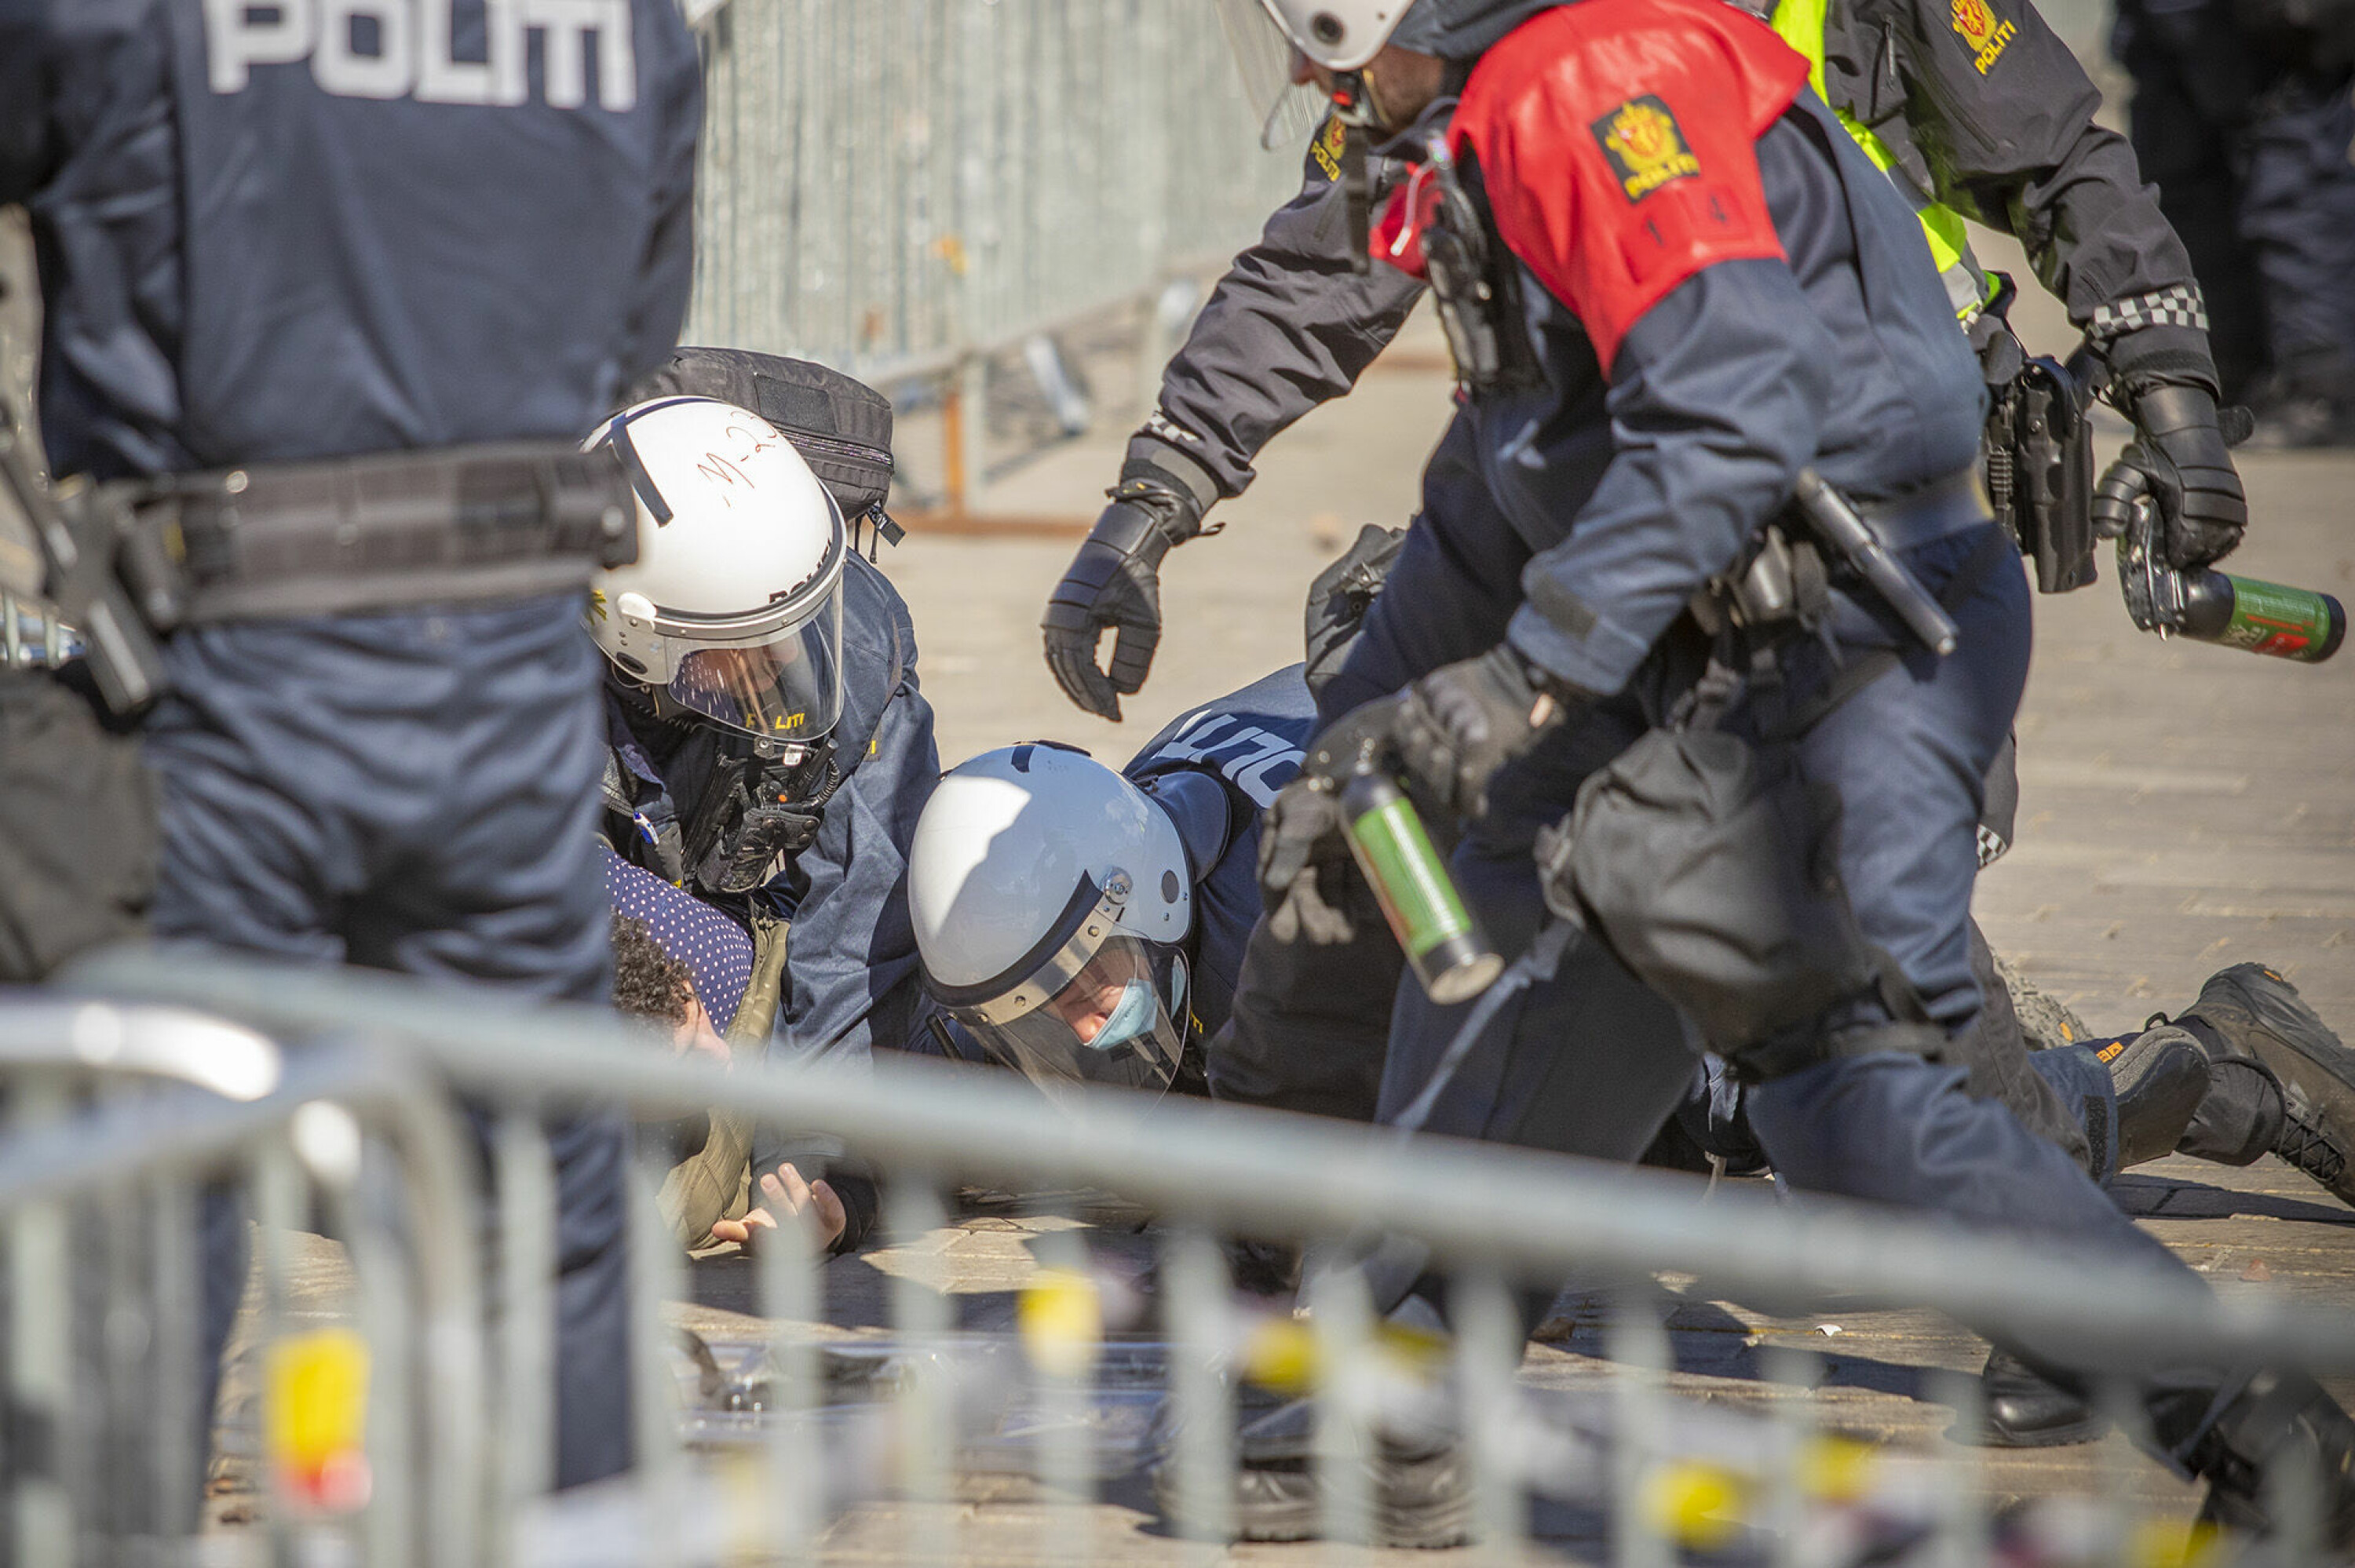 BASKETAK: Flere personer ble arrestert under tumultene på Strømsø Torg i fjor.